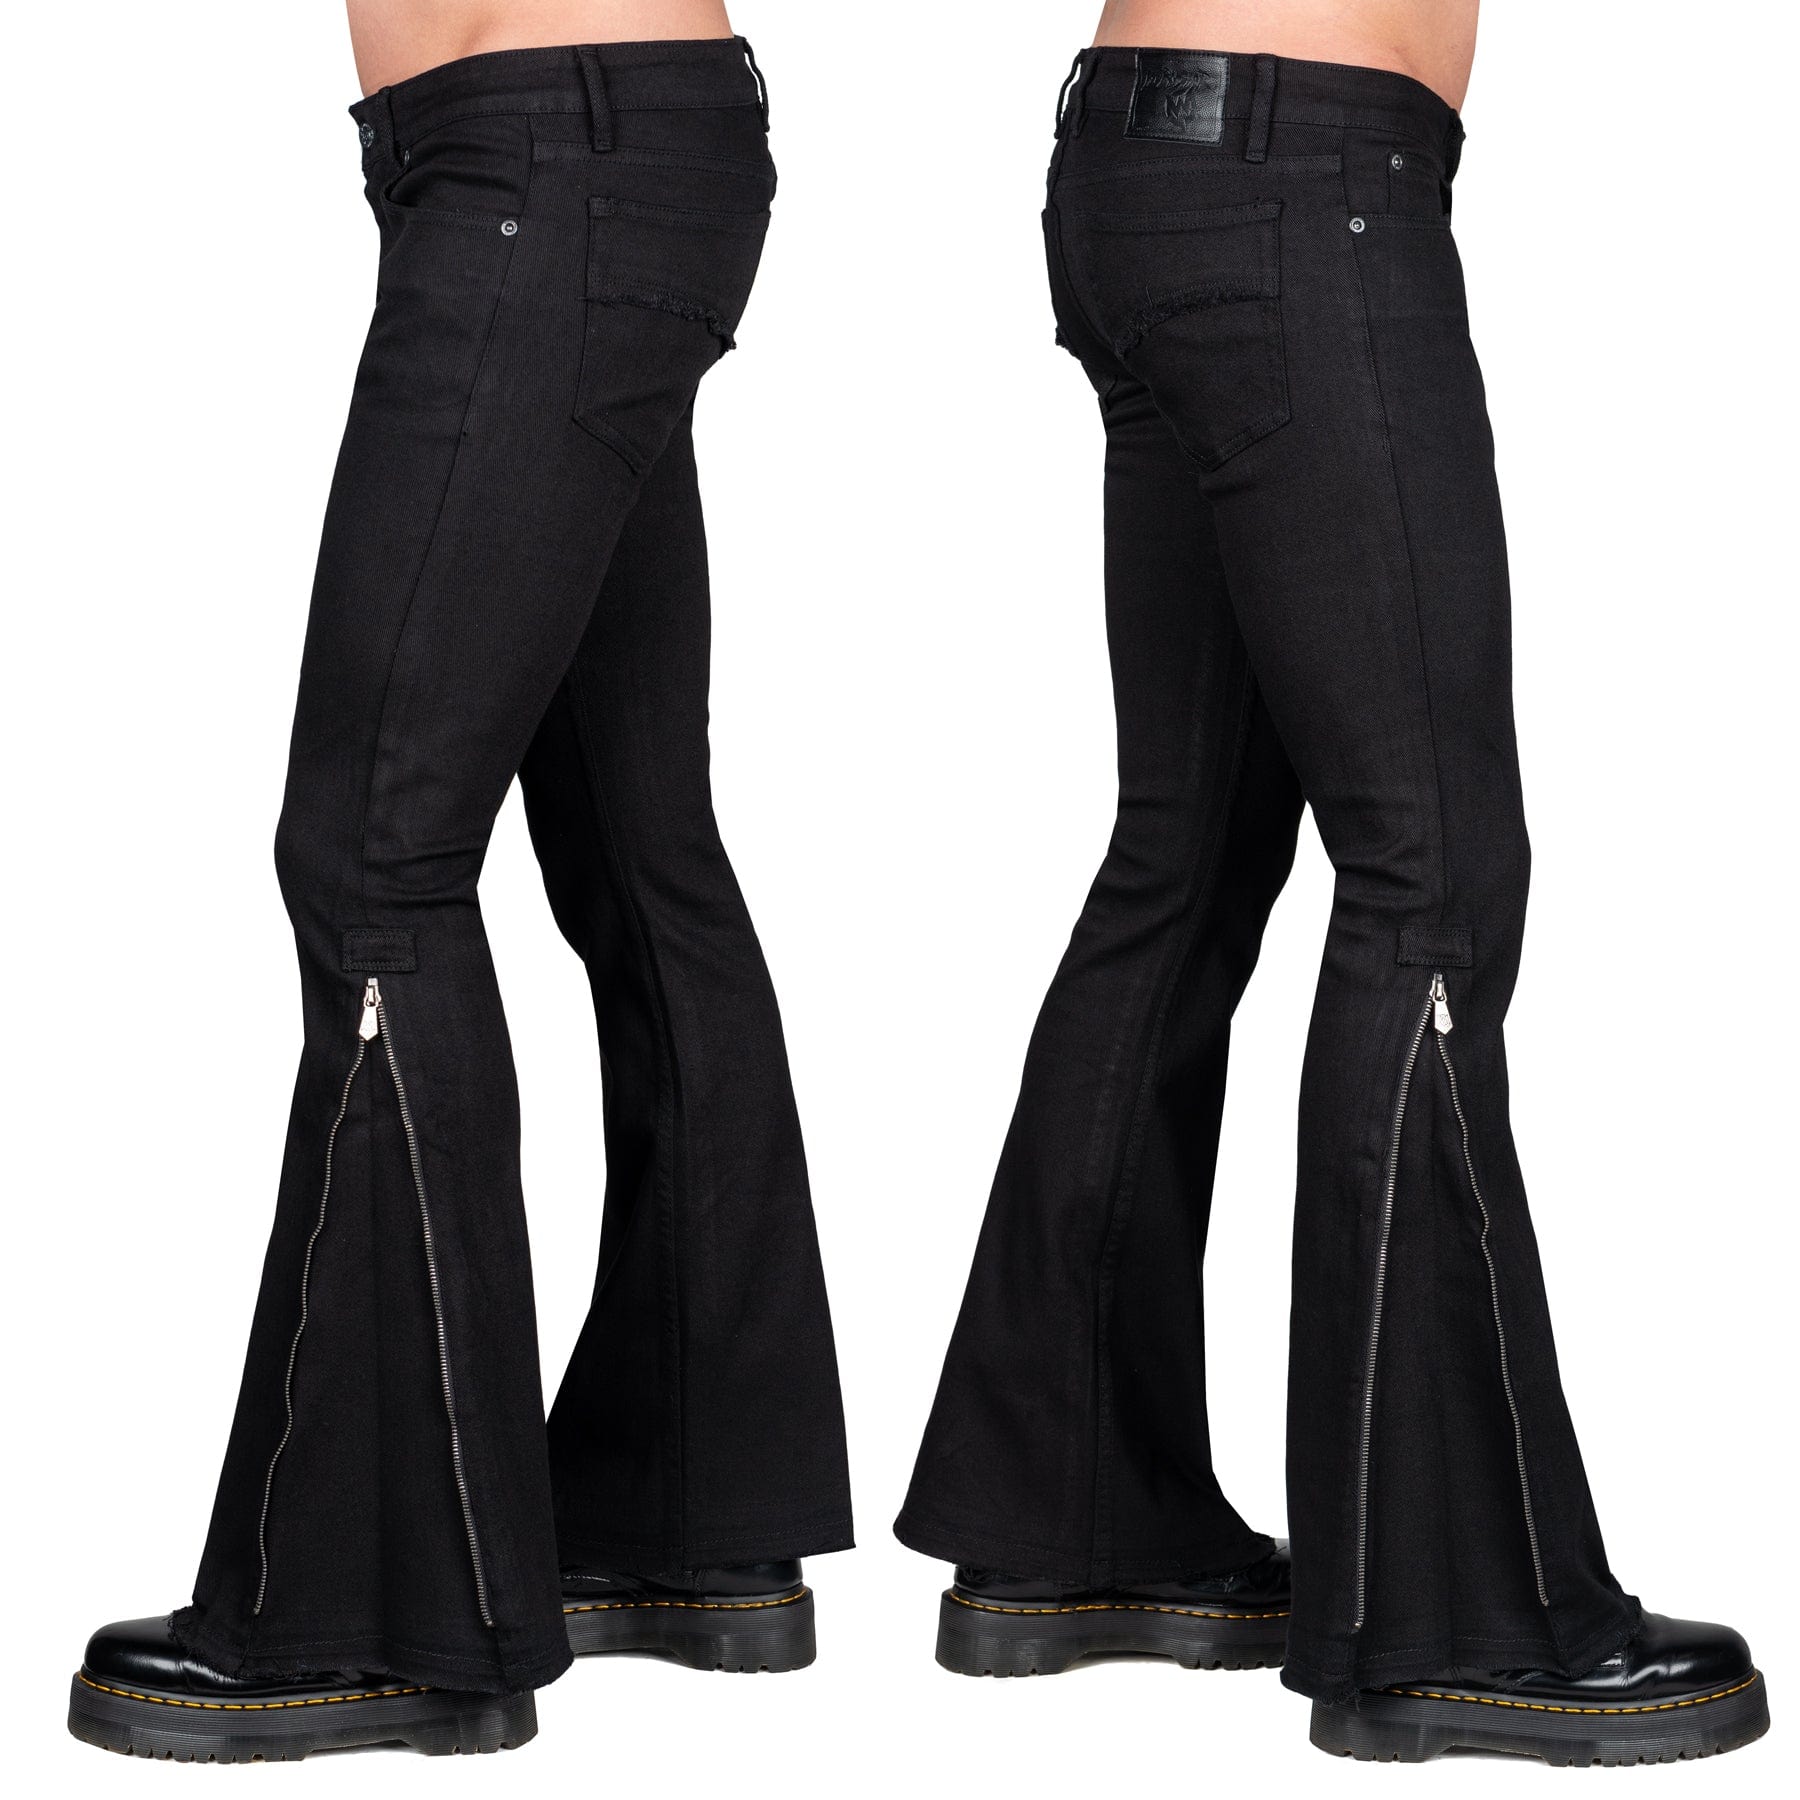 Wornstar Clothing Pants Hellraiser Side Zipper Mens Jeans - Black